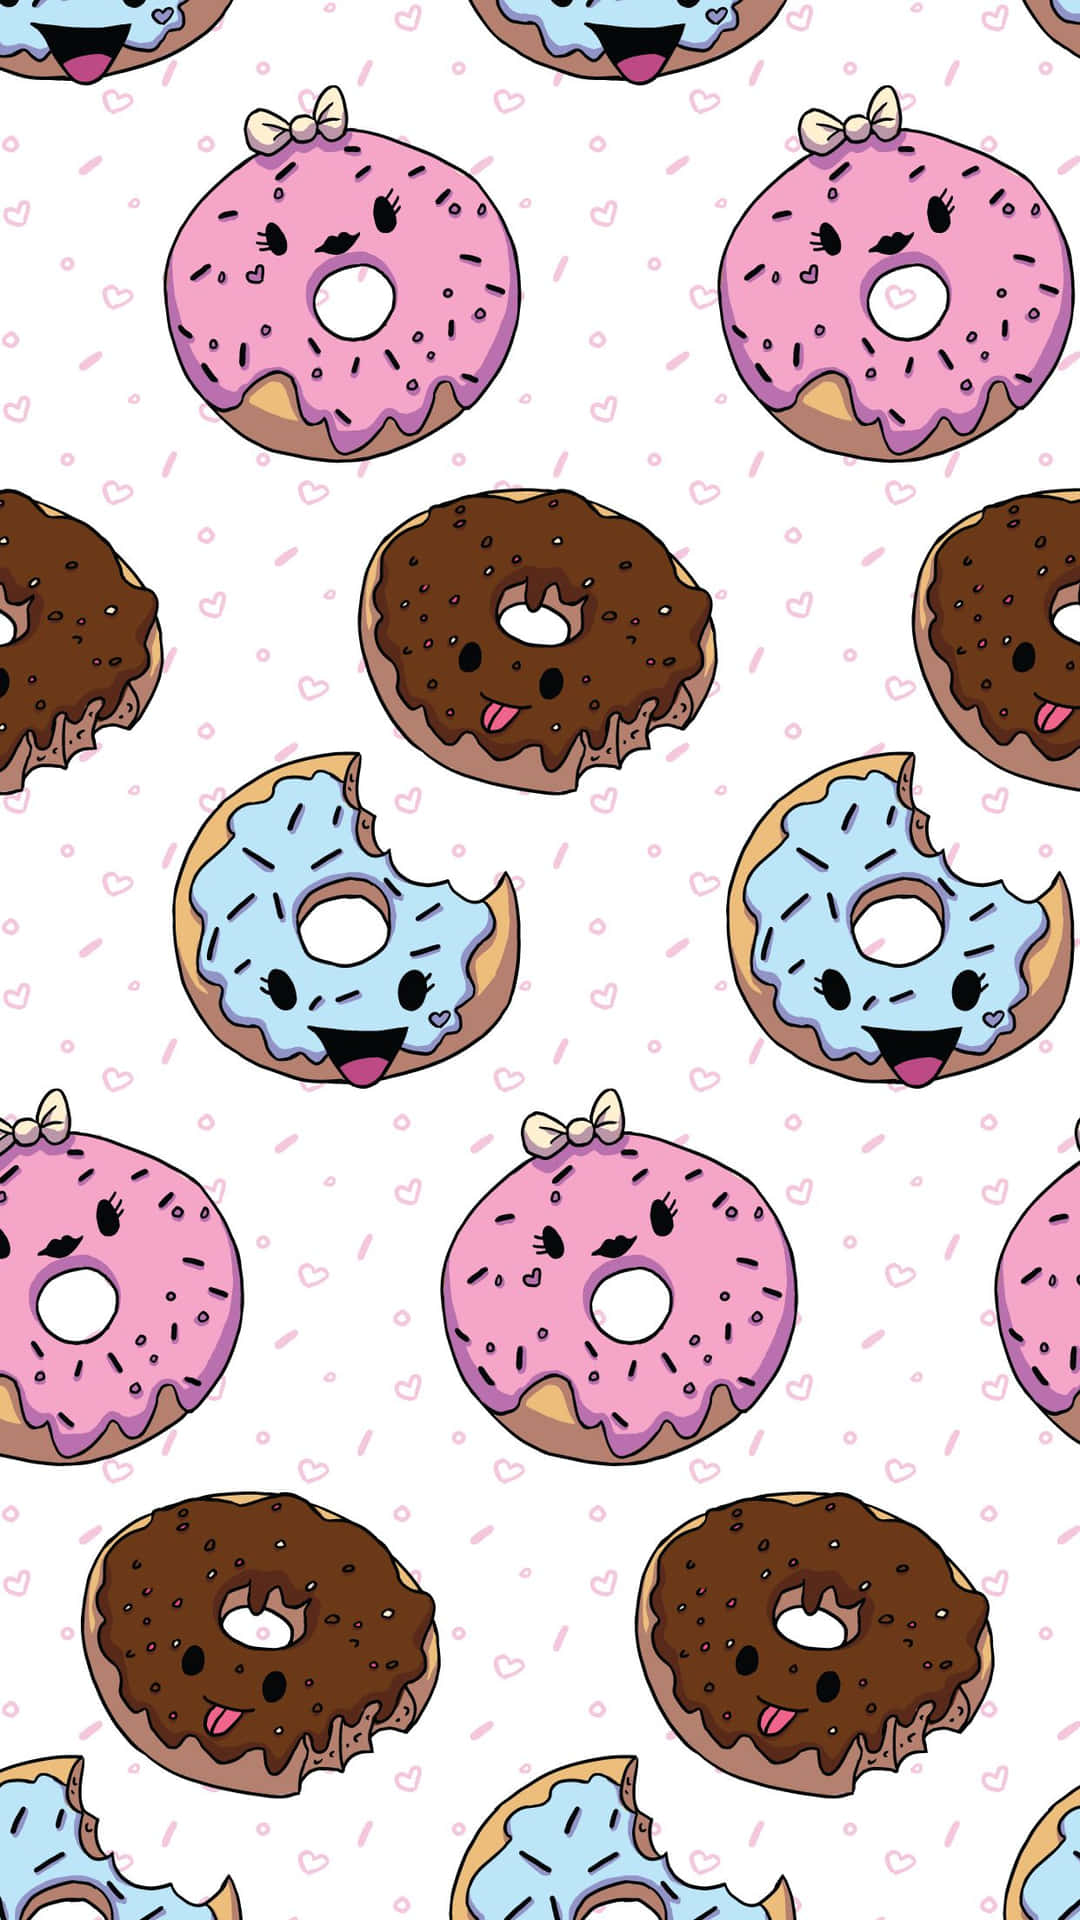 Sweet Delicious Treat: Cute Donut Wallpaper